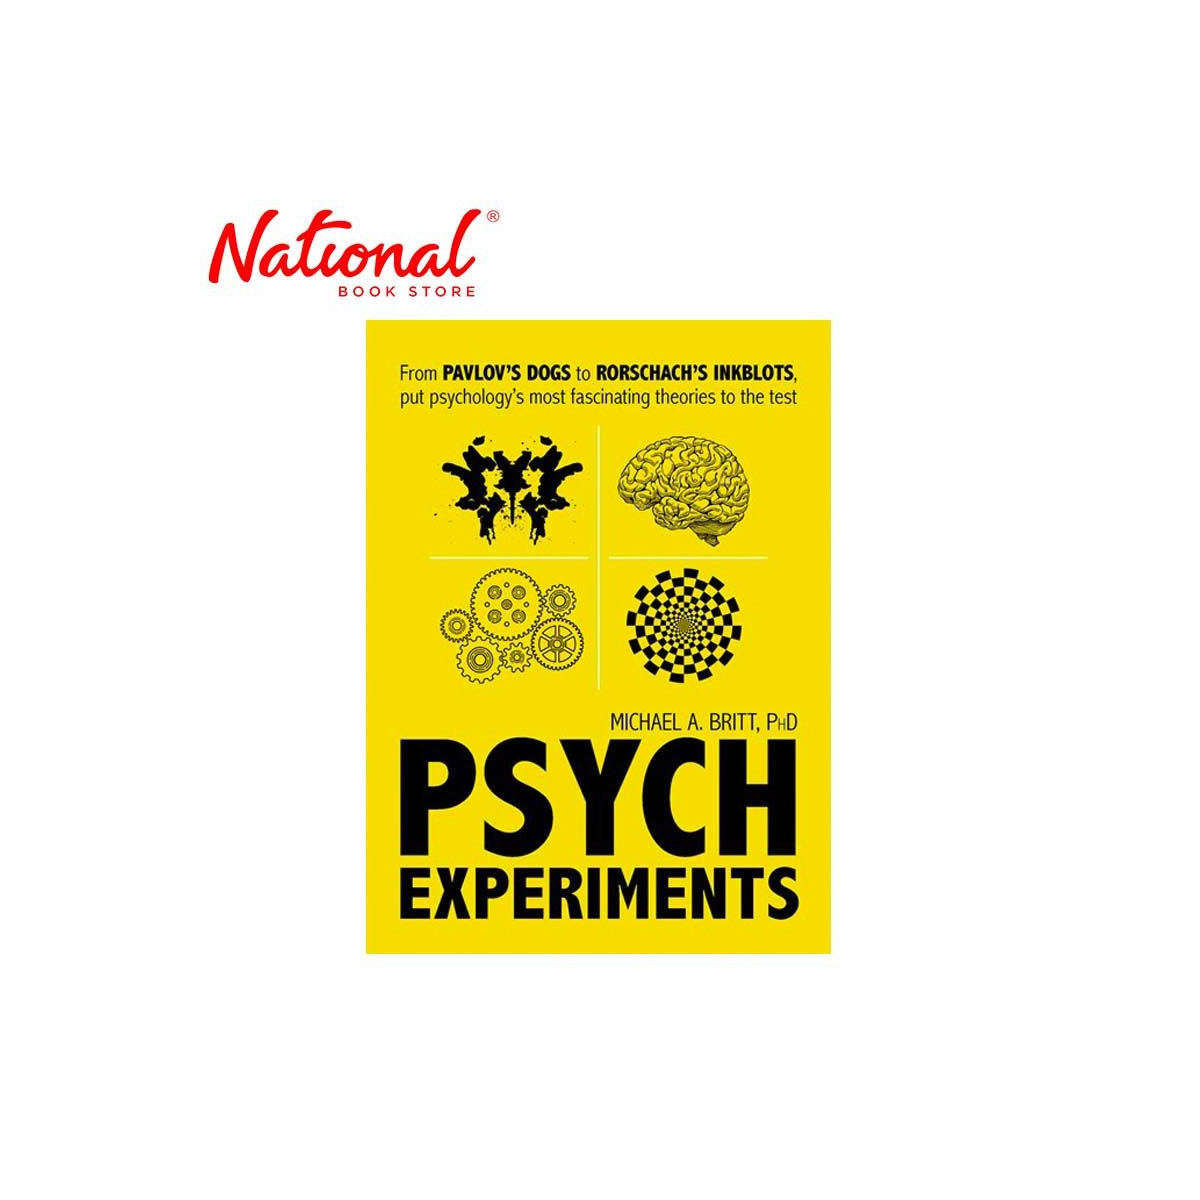 Psych Experiments by Michael A. Britt - Psychology